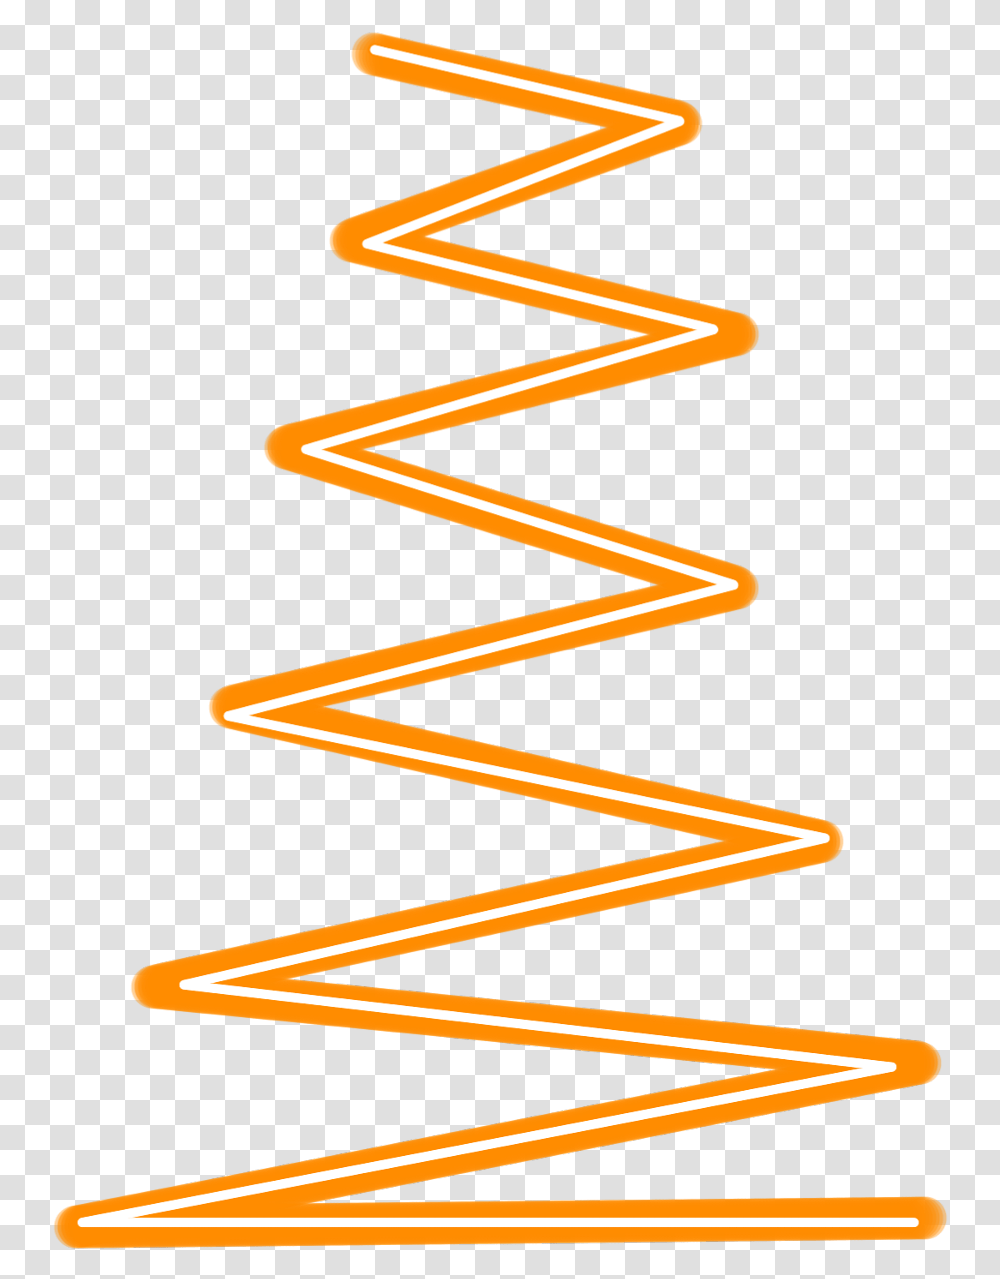 Neon Linelines Freetoedit Spiral Orange Geometric Neon Orange Line, Light Transparent Png